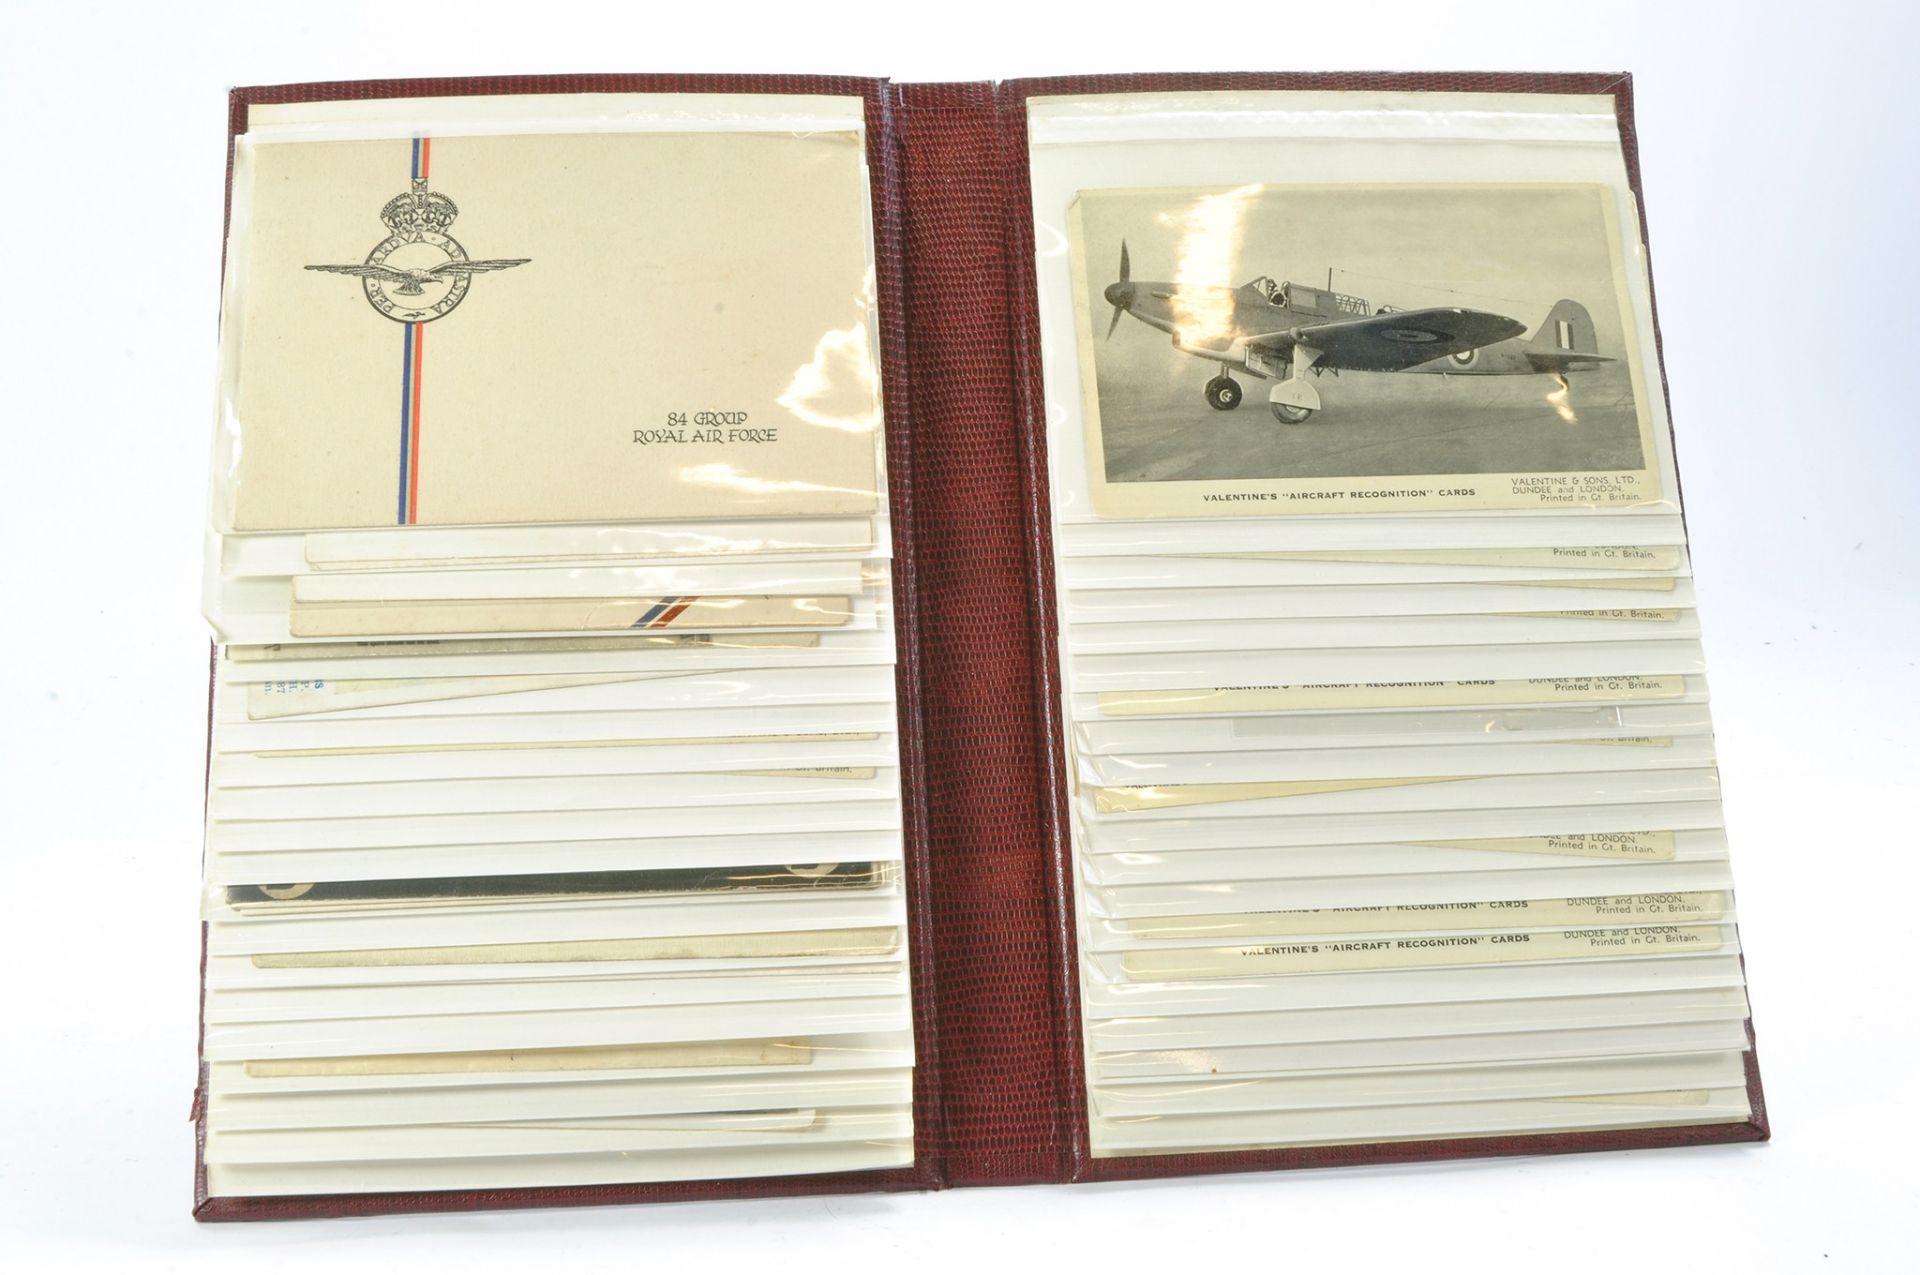 An interesting album of military interest and paraphenalia / aircraft ephemera including various